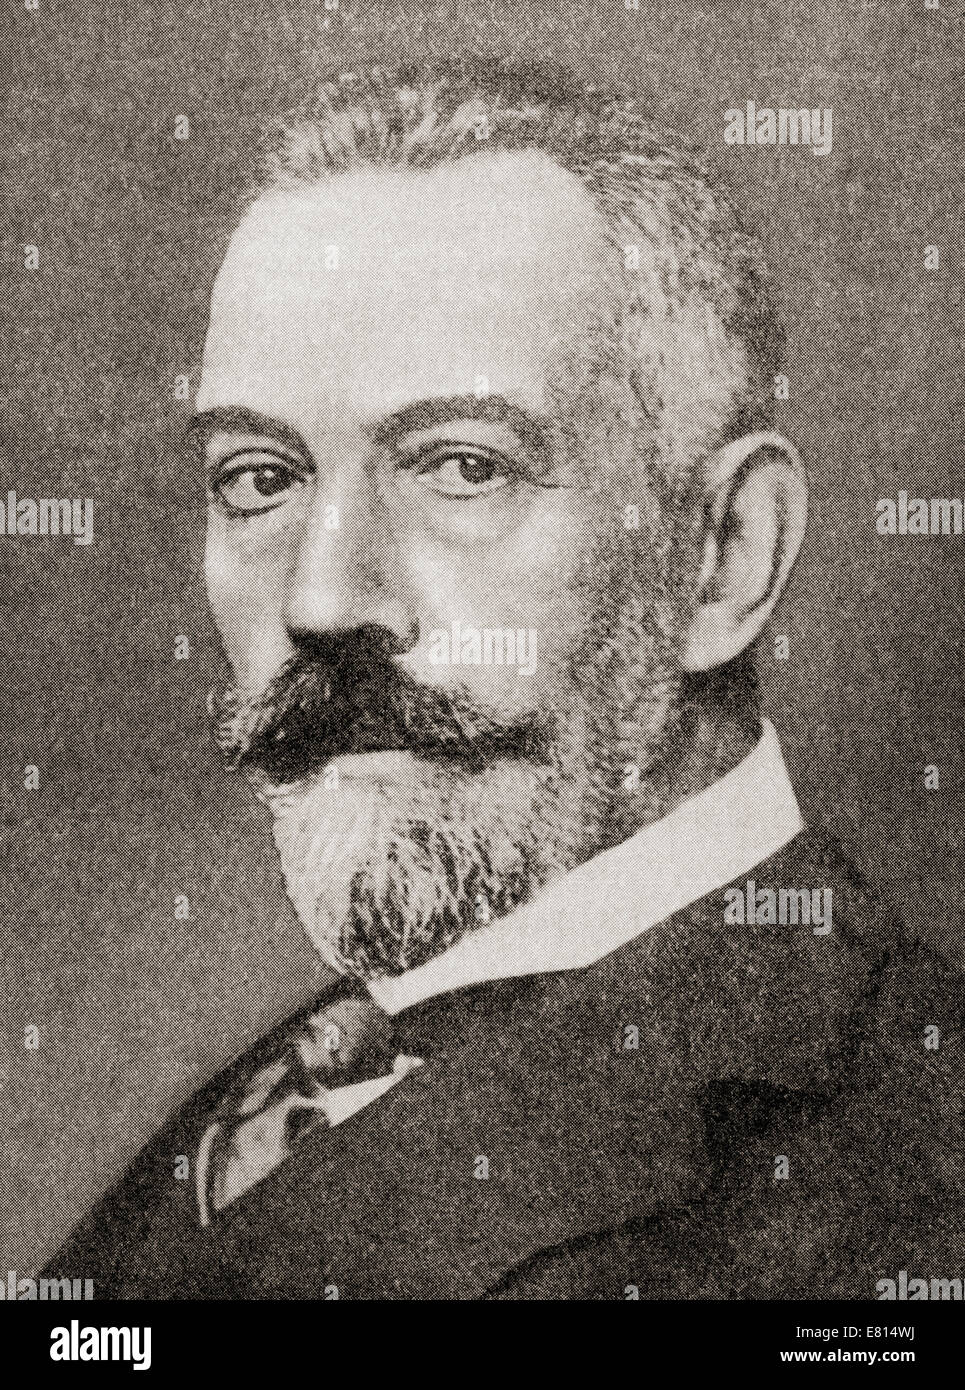 Theodor Friedrich Alfred Theobald von Bethmann Hollweg, 1856 - 1921. Homme politique allemand, homme d'État Banque D'Images